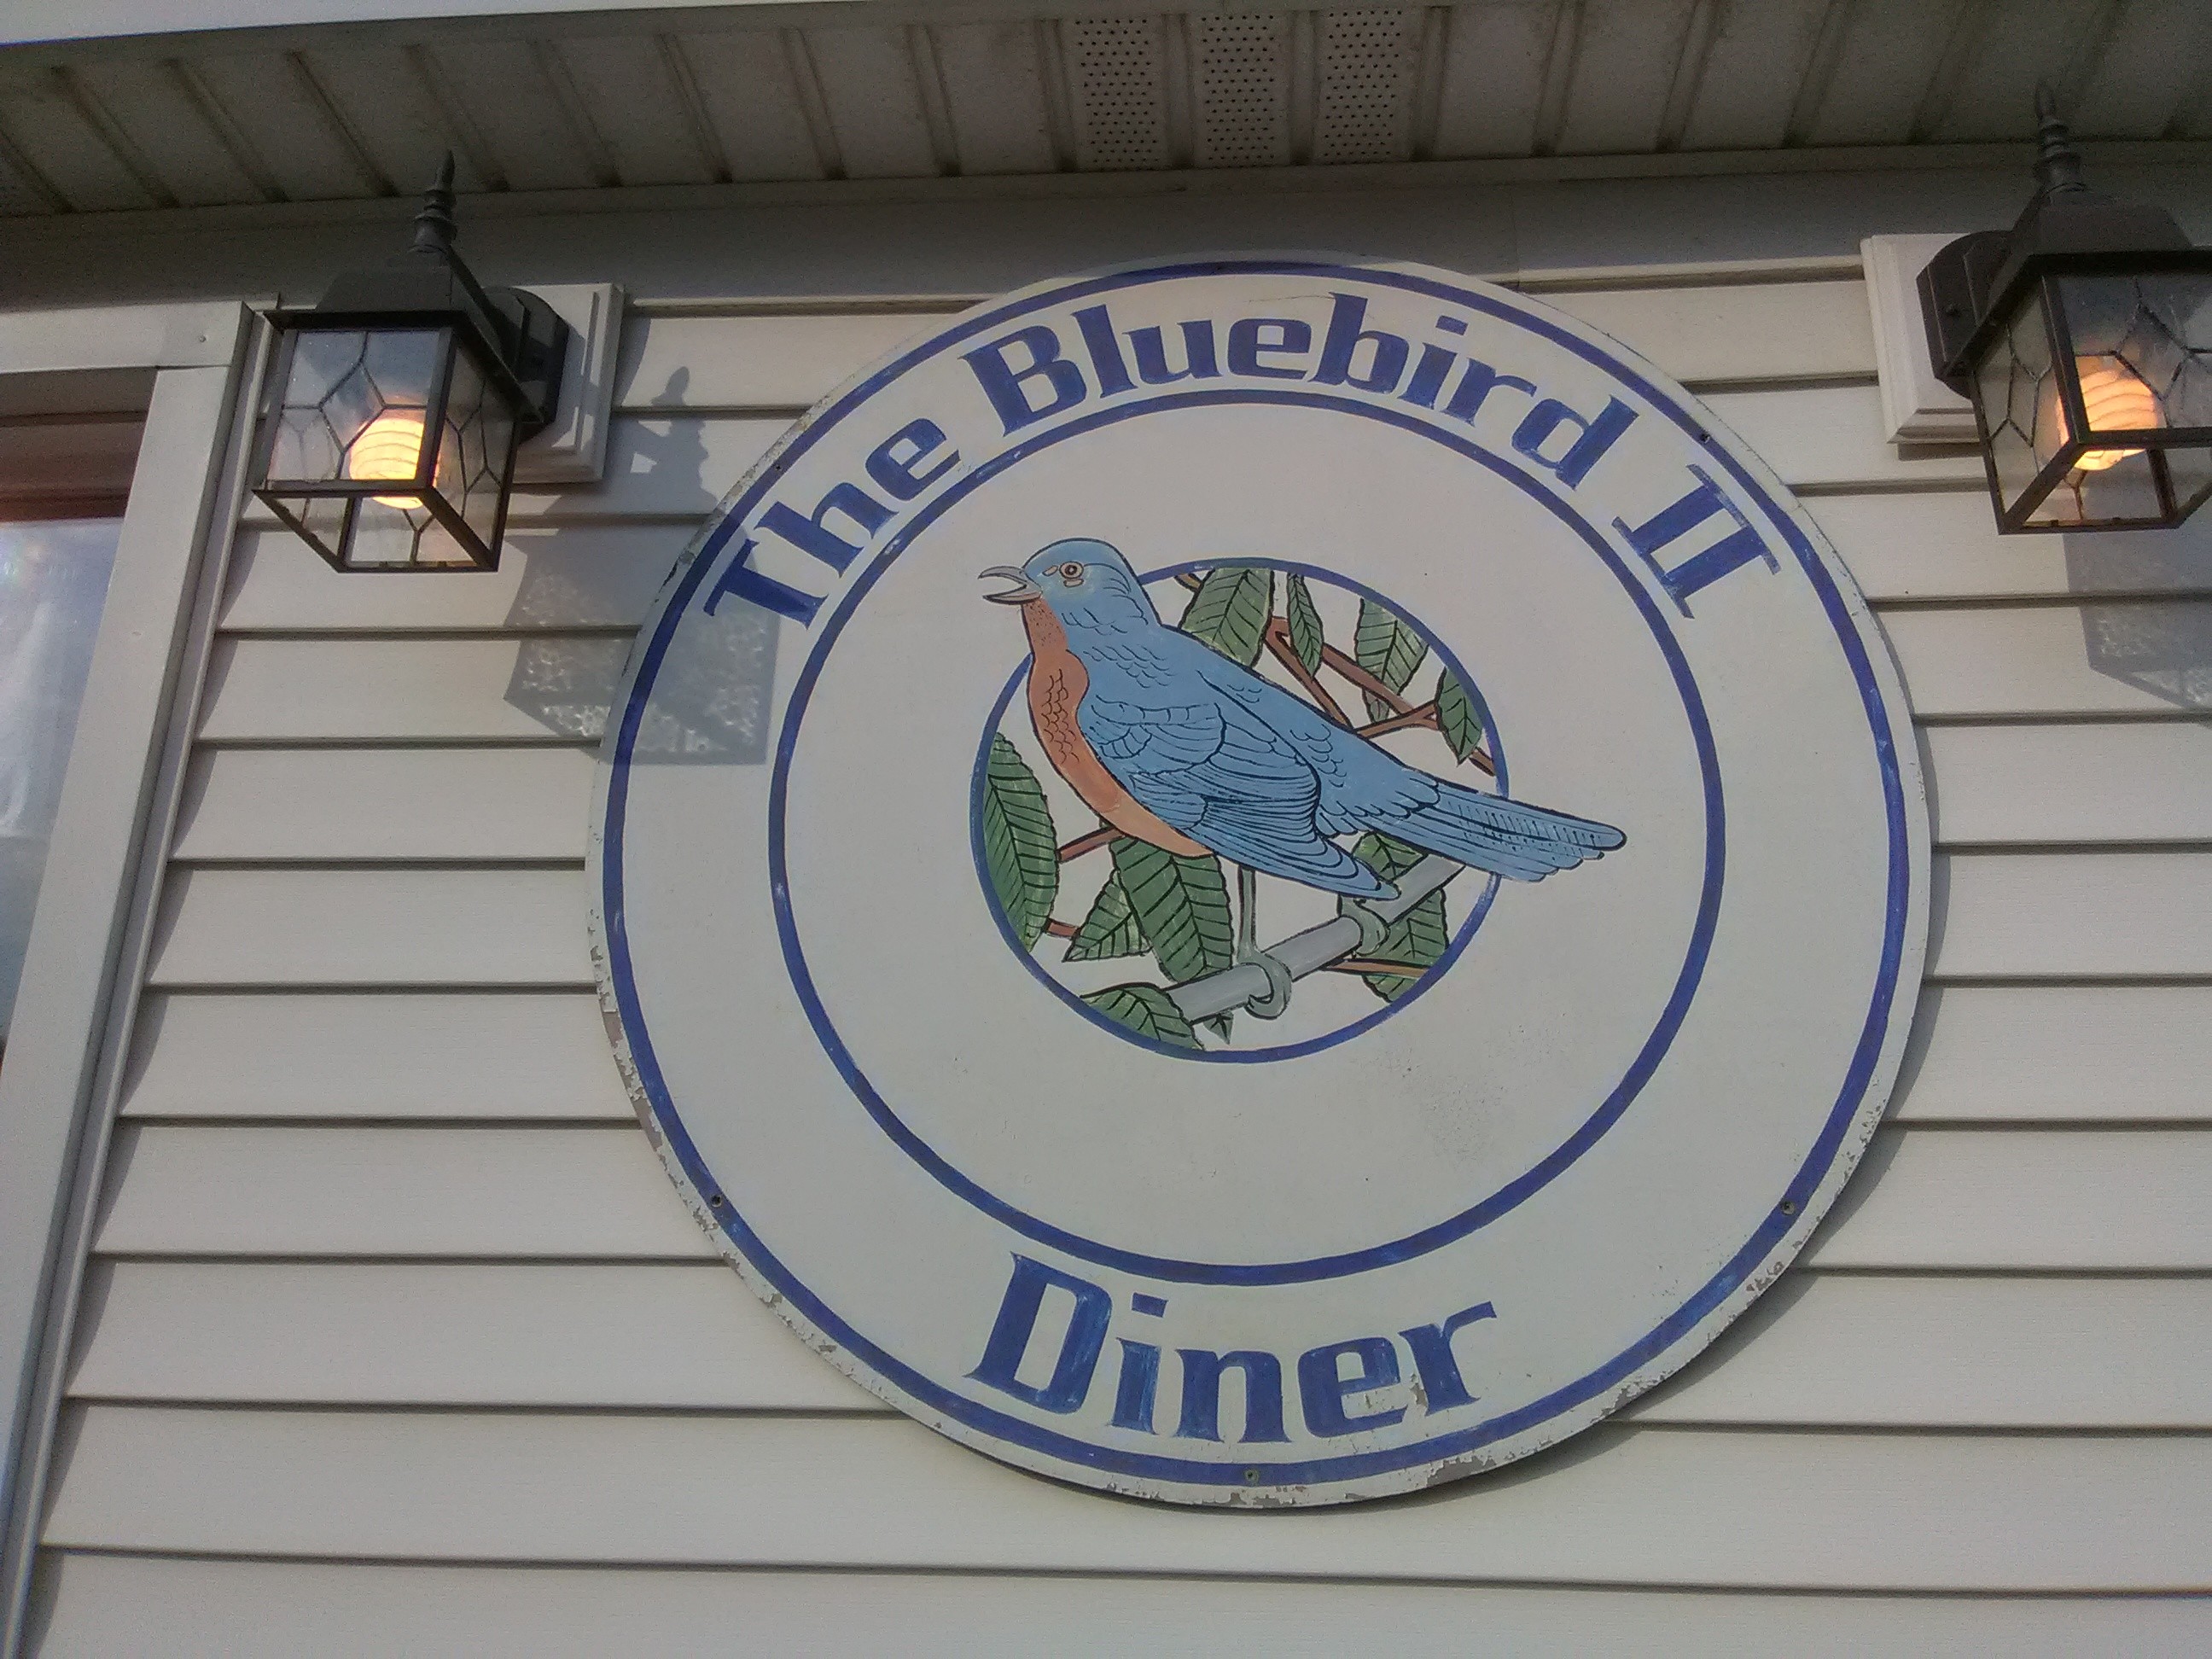 Bluebird II Diner - Sign